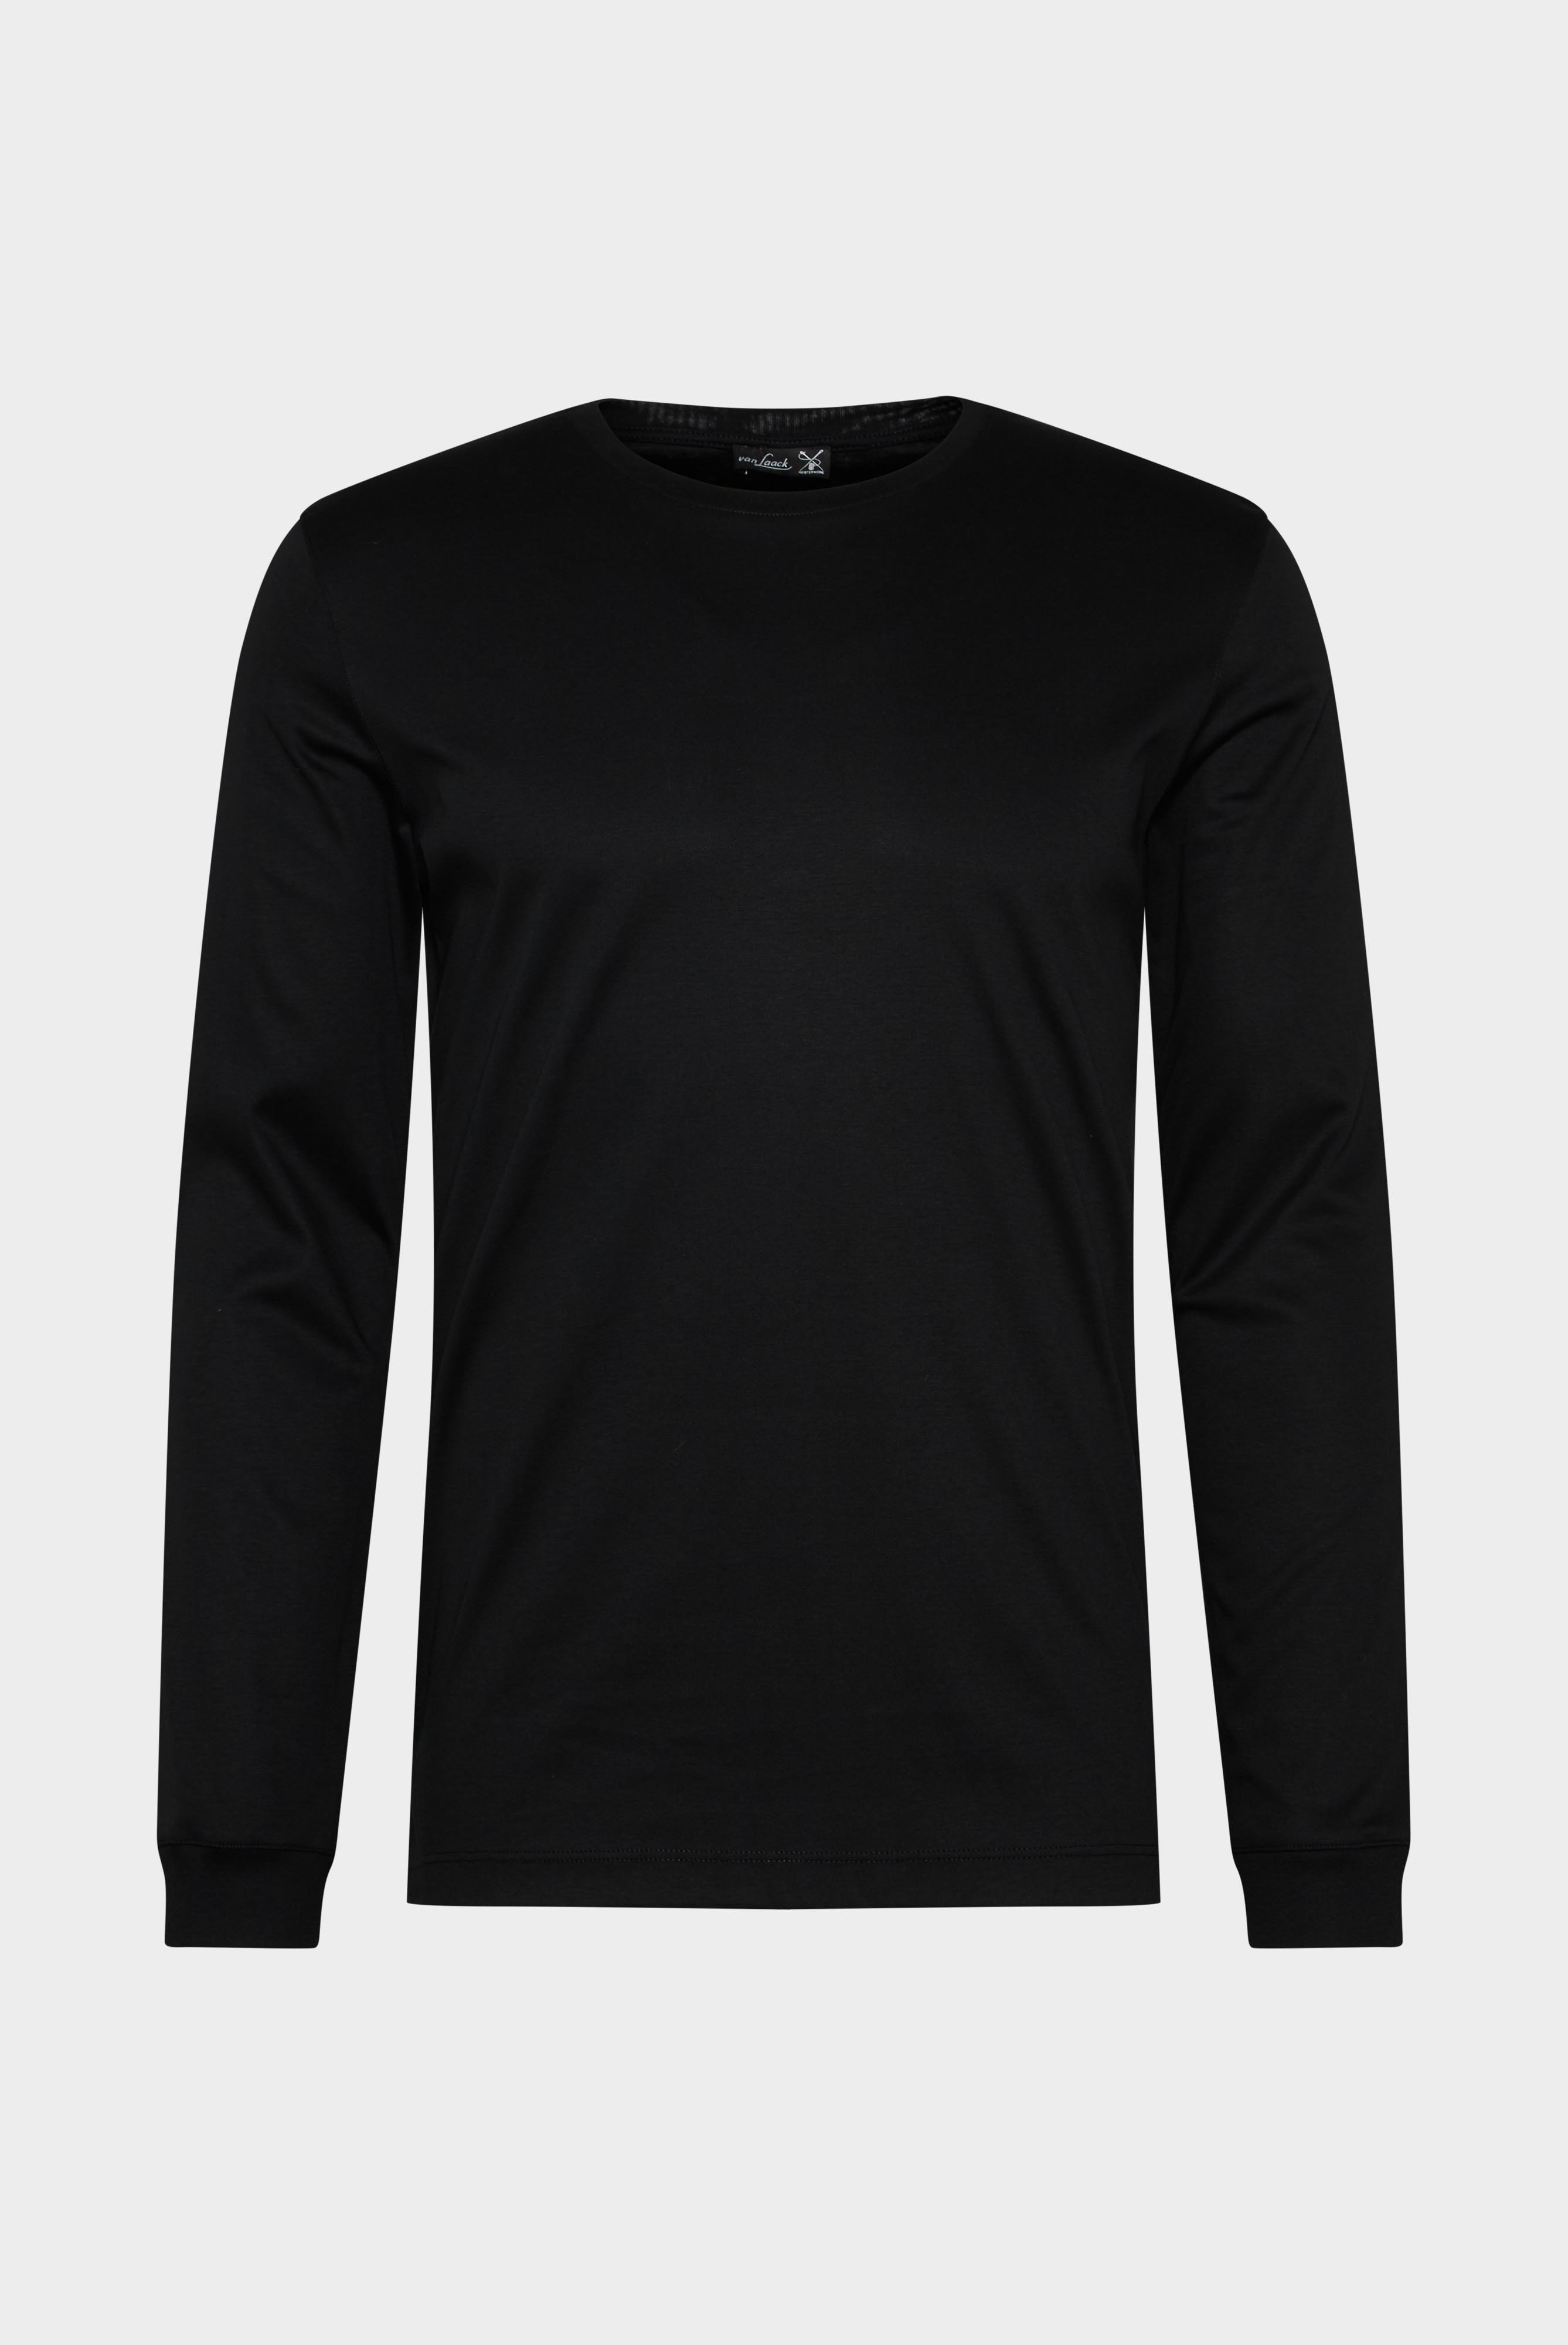 T-Shirts+Longsleeve Swiss Cotton Jersey Crew Neck T-Shirt+20.1718.UX.180031.099.X4L